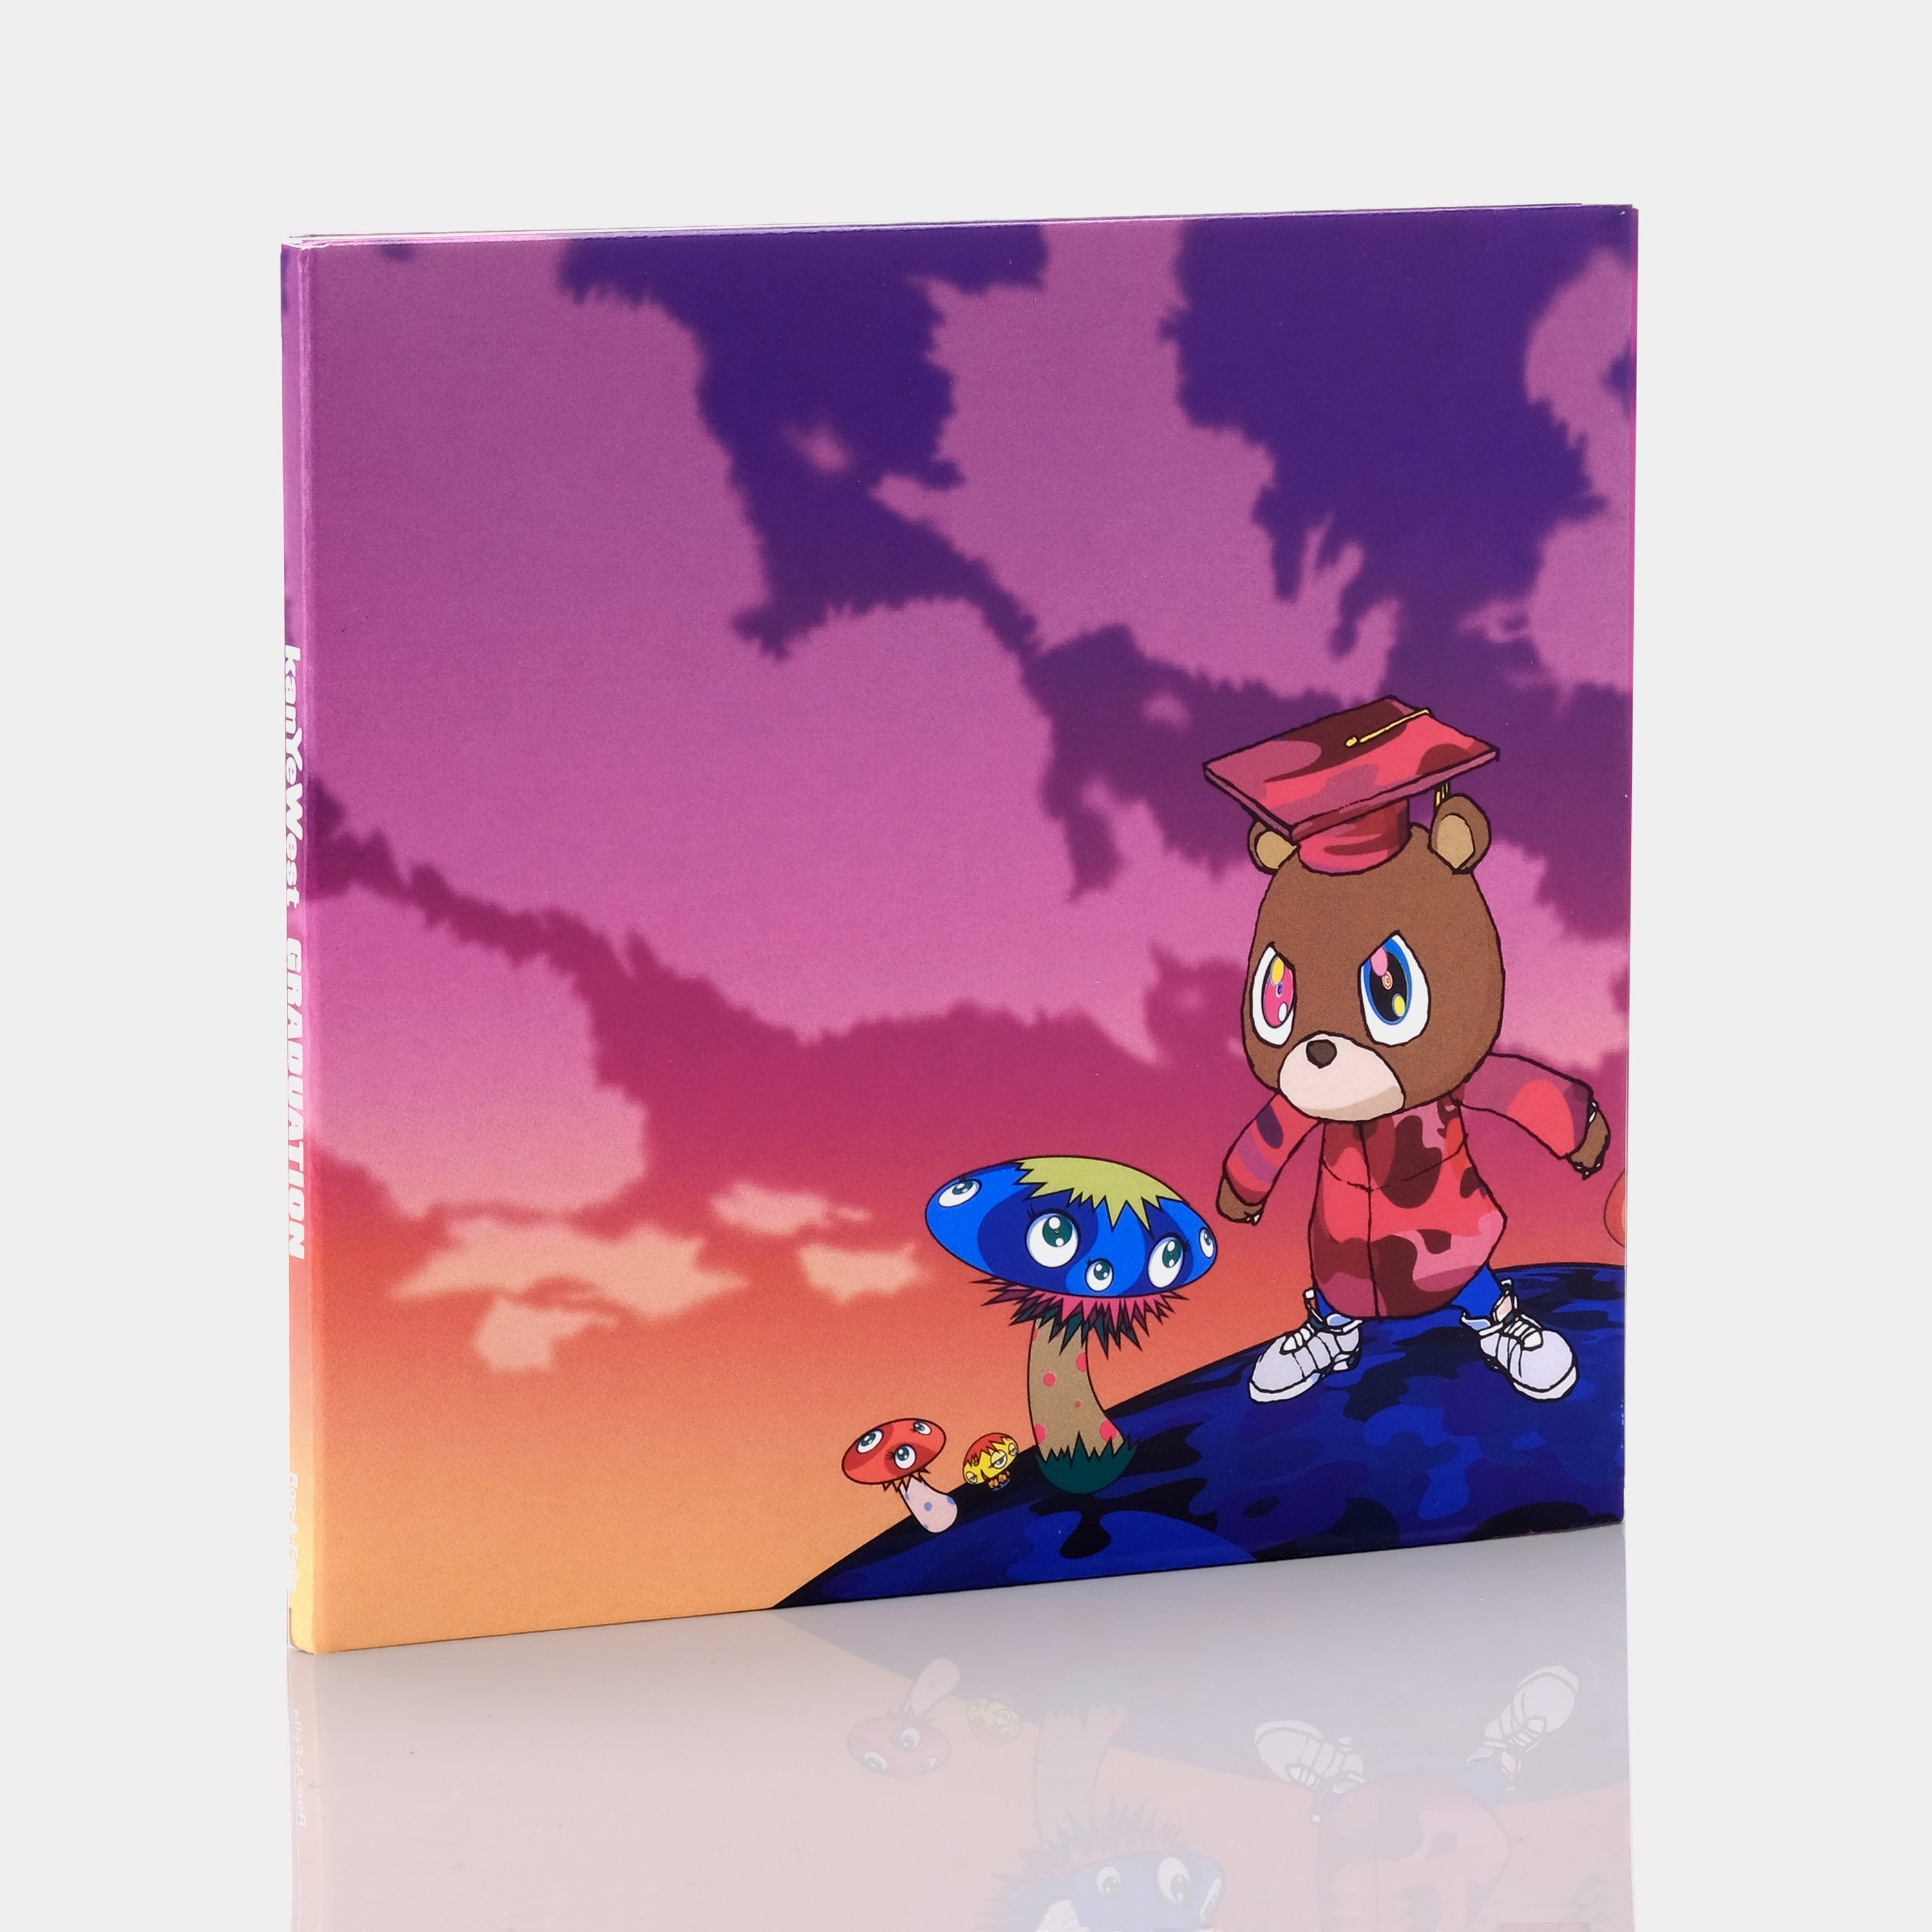 Kanye West - Graduation (Enhanced) CD